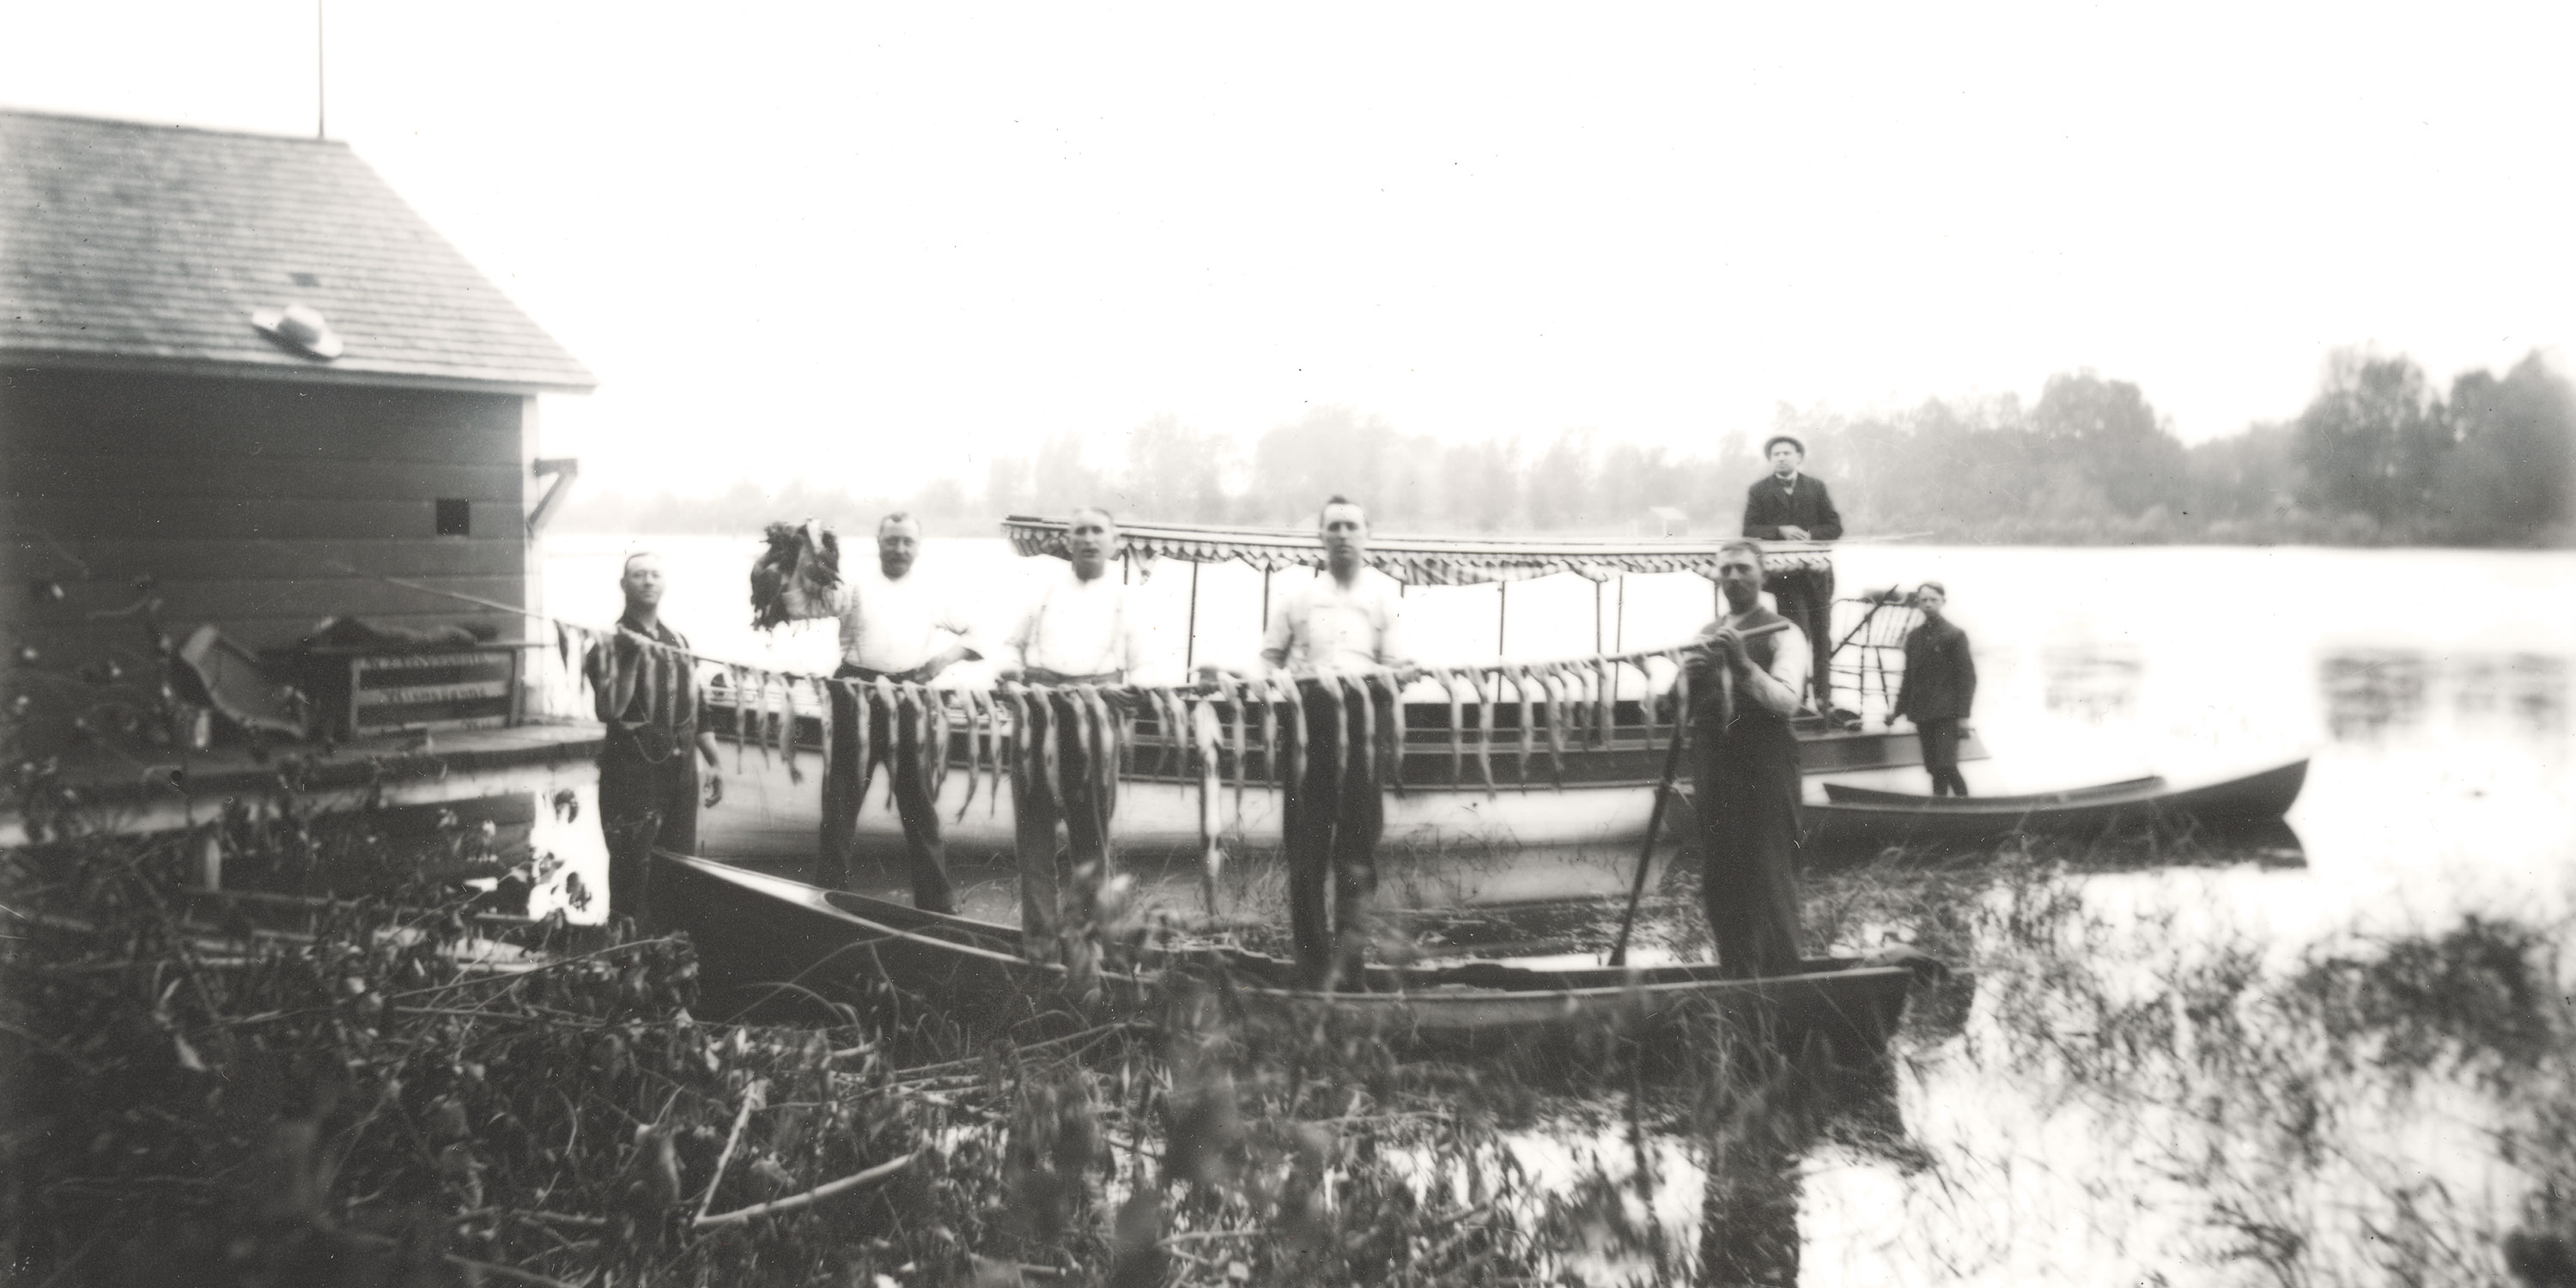 Historic black and white photograph of fishermen